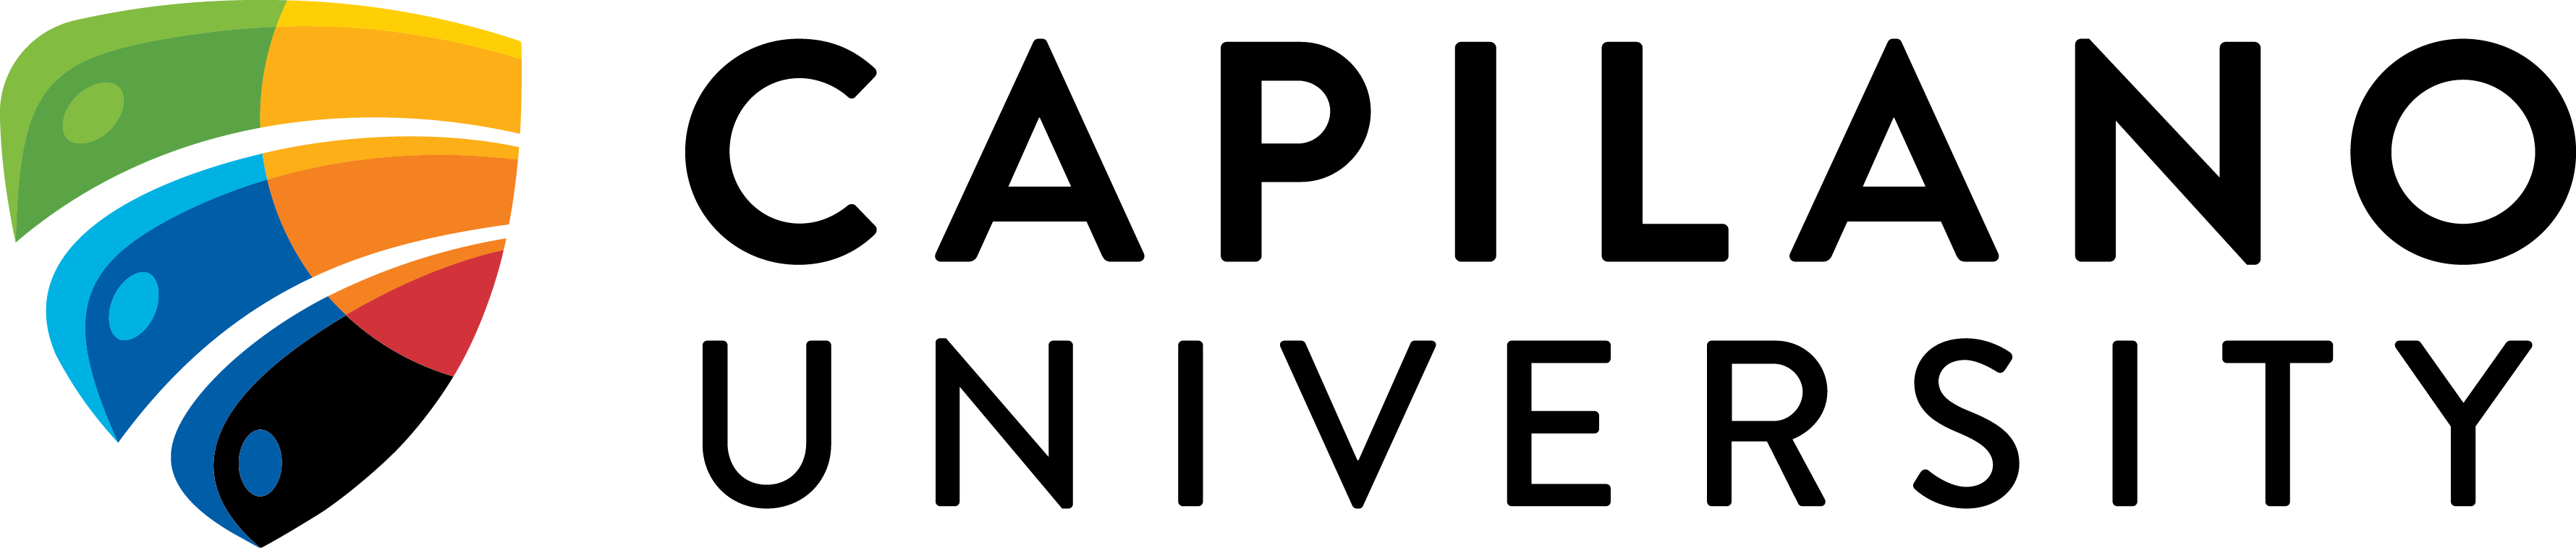 Capilano University  Portal logo